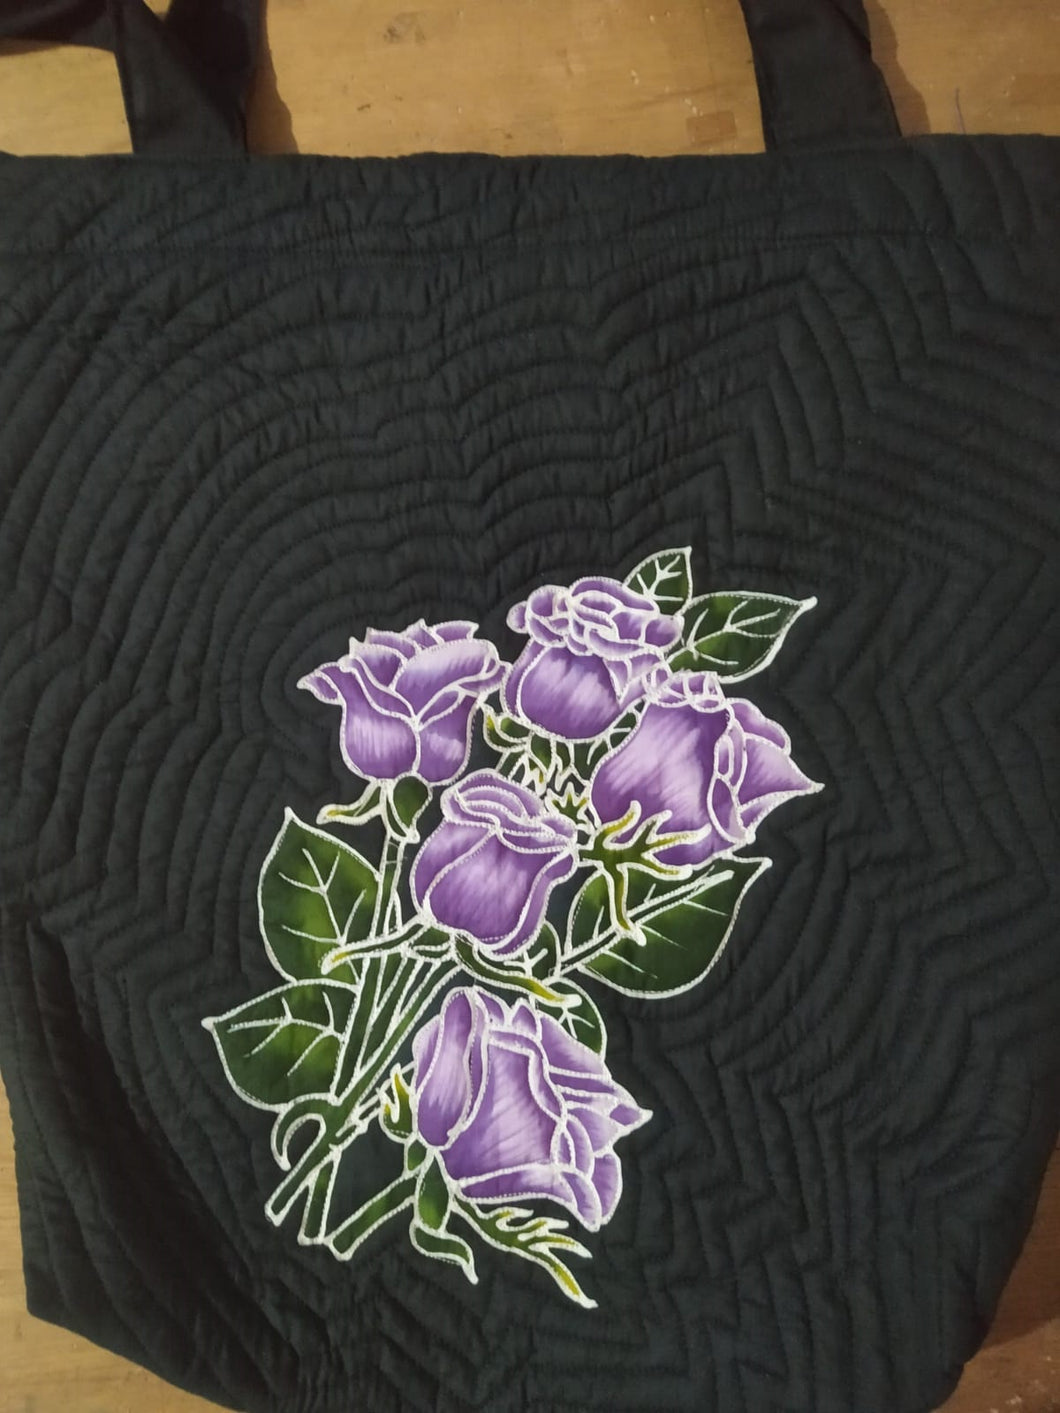 Shoulder bag with a bouquet of lavender roses. The design is handpainted batik. The background color is black.